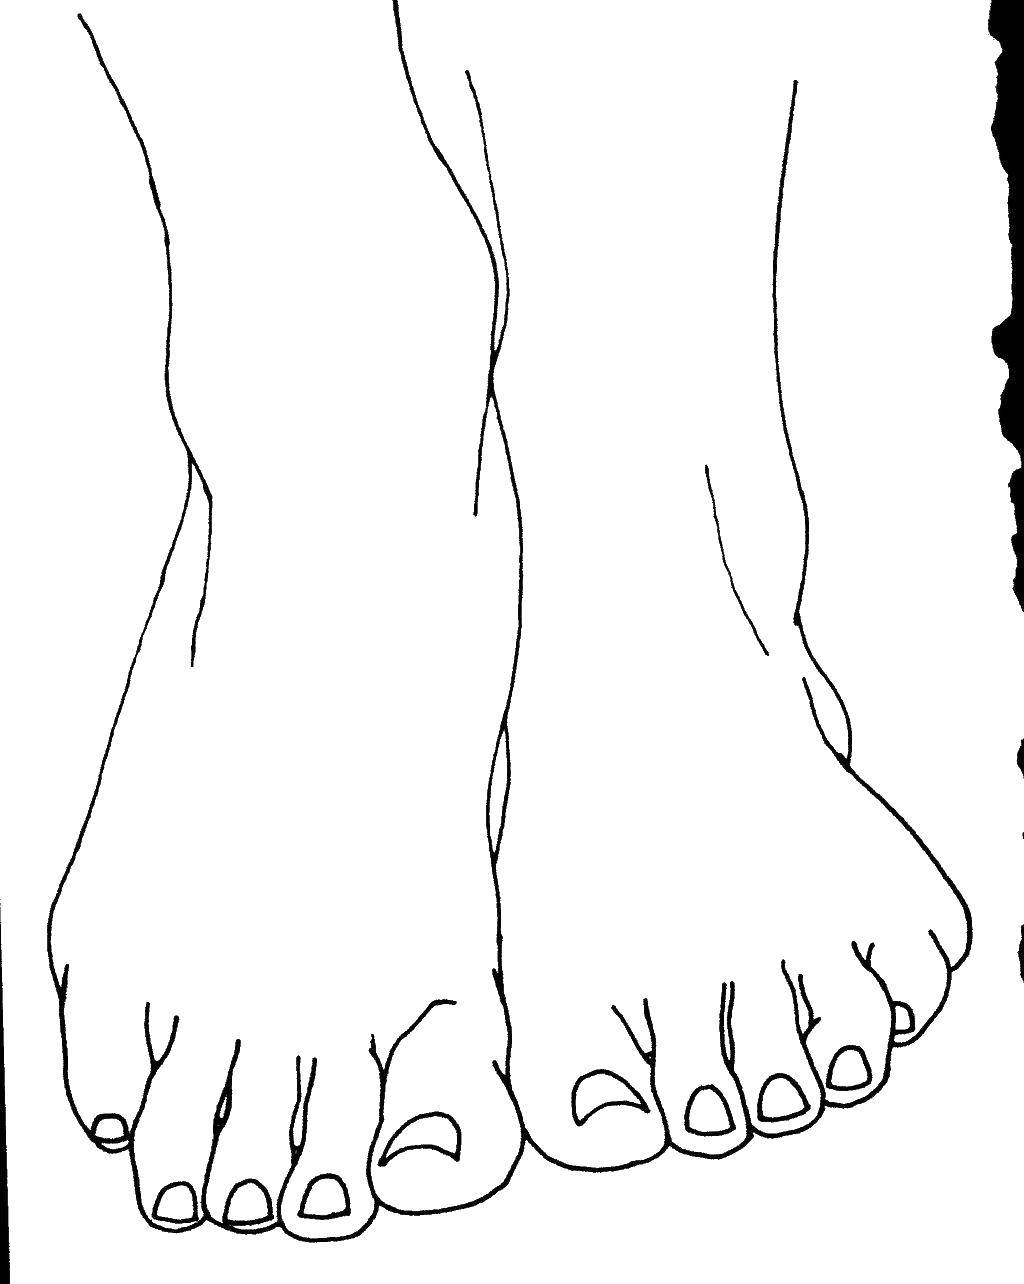 Название: Раскраска Две ноги. Категория: Люди. Теги: ноги.